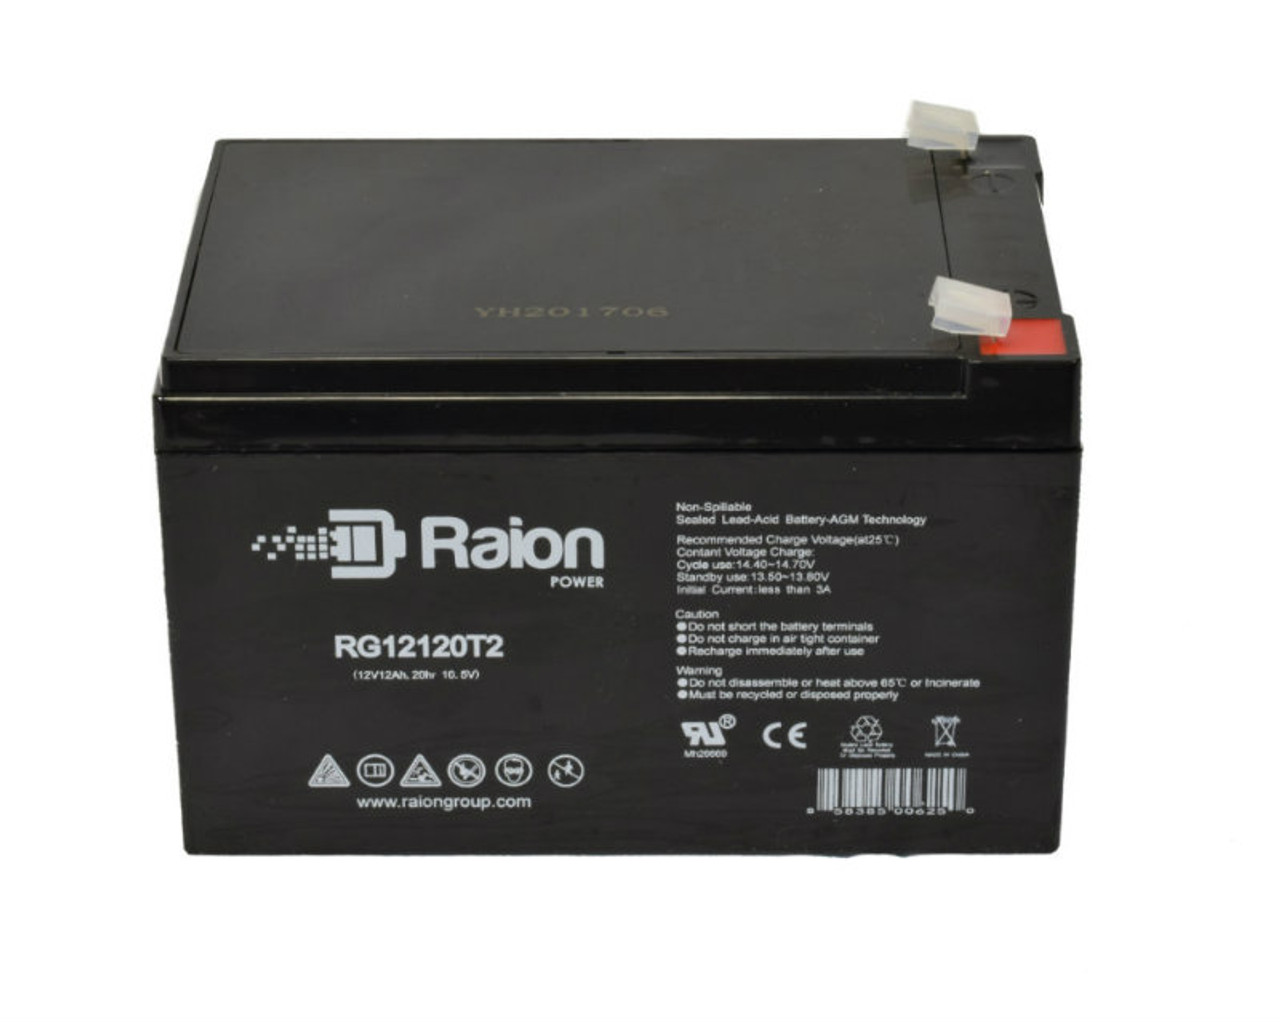 Raion Power RG12120T2 SLA Battery for ShoPride Mobilityr Dasher Wheelchairs